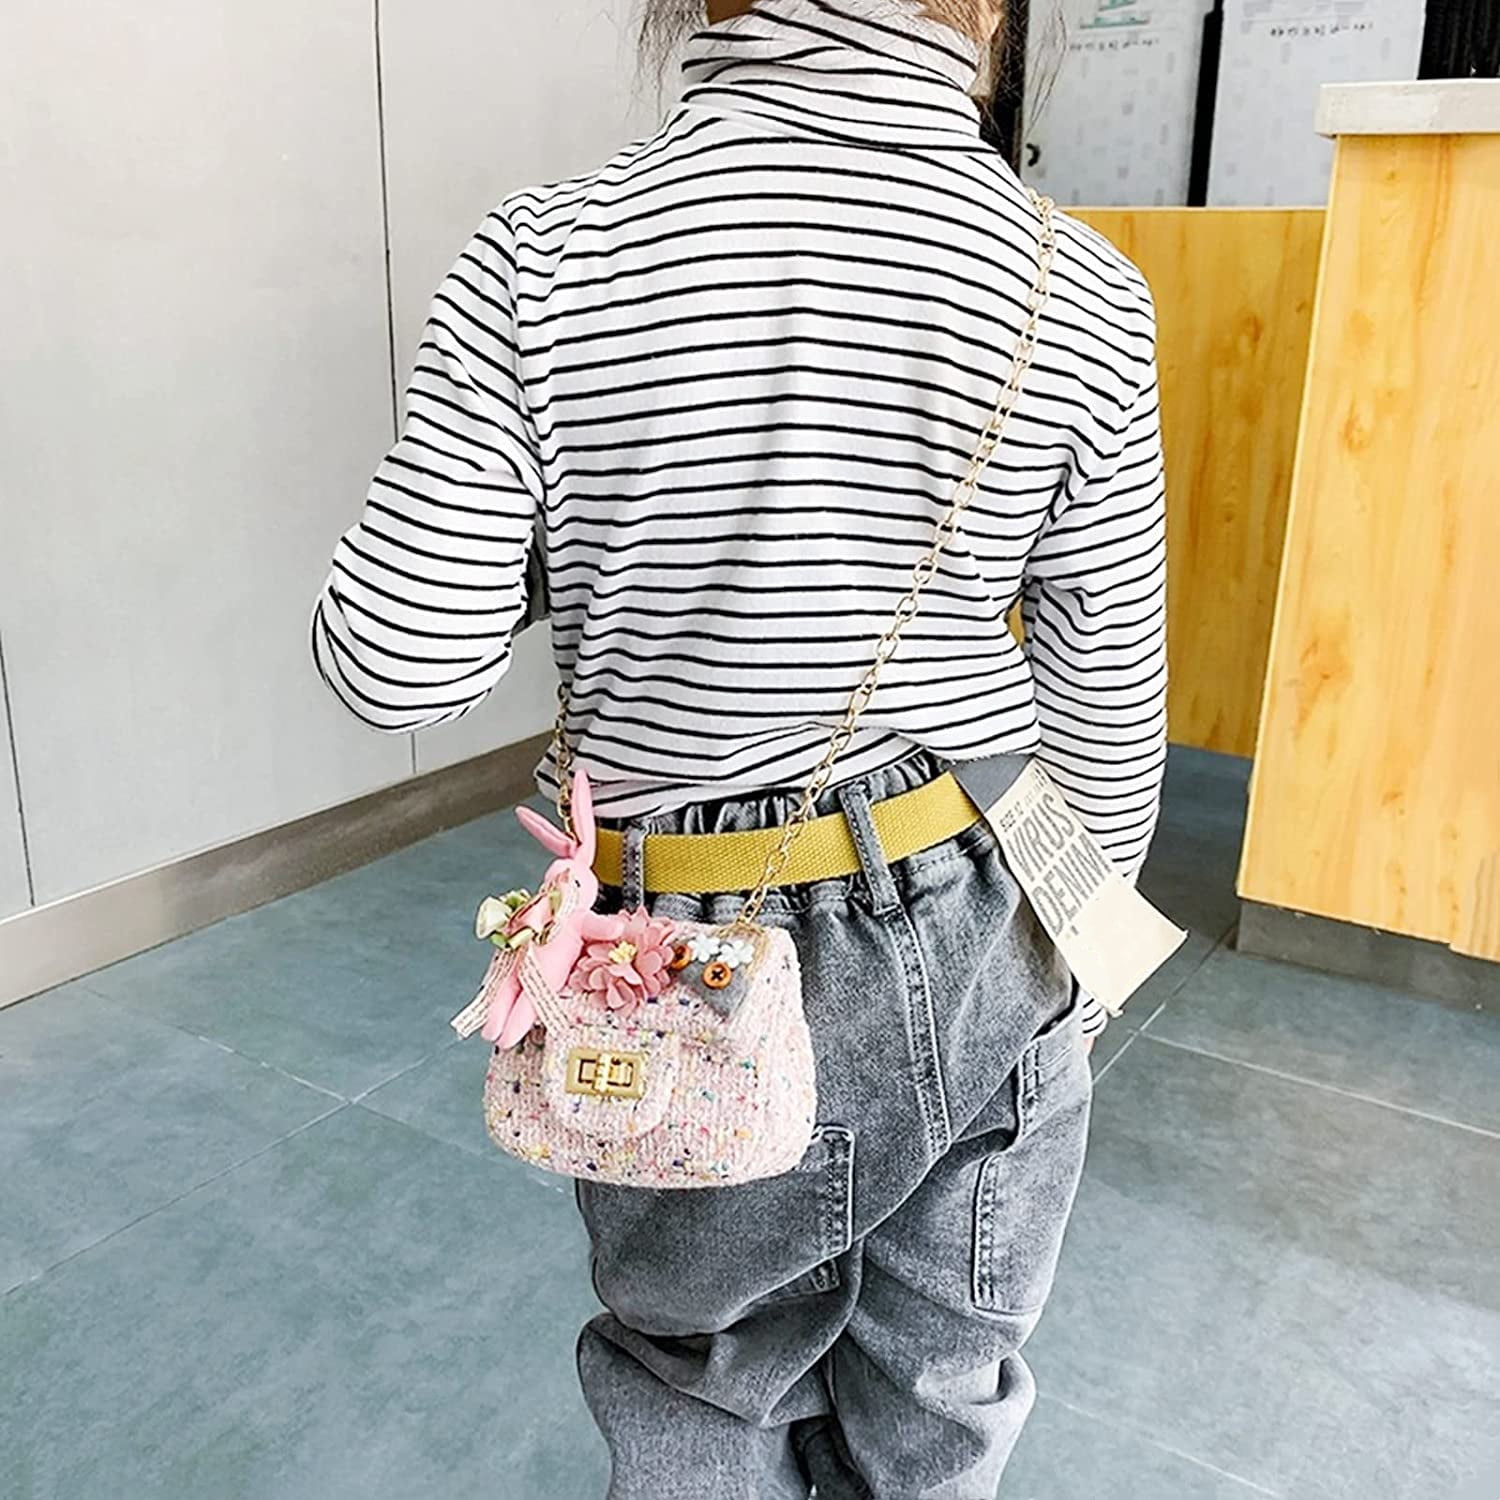 Yuanbang Little Girls Handbags Flower Shaped Lock Girls Purse Mini Crossbody Bags Chain Kids Handbag Shoulder Bag for Girls Children Toddler Teens(